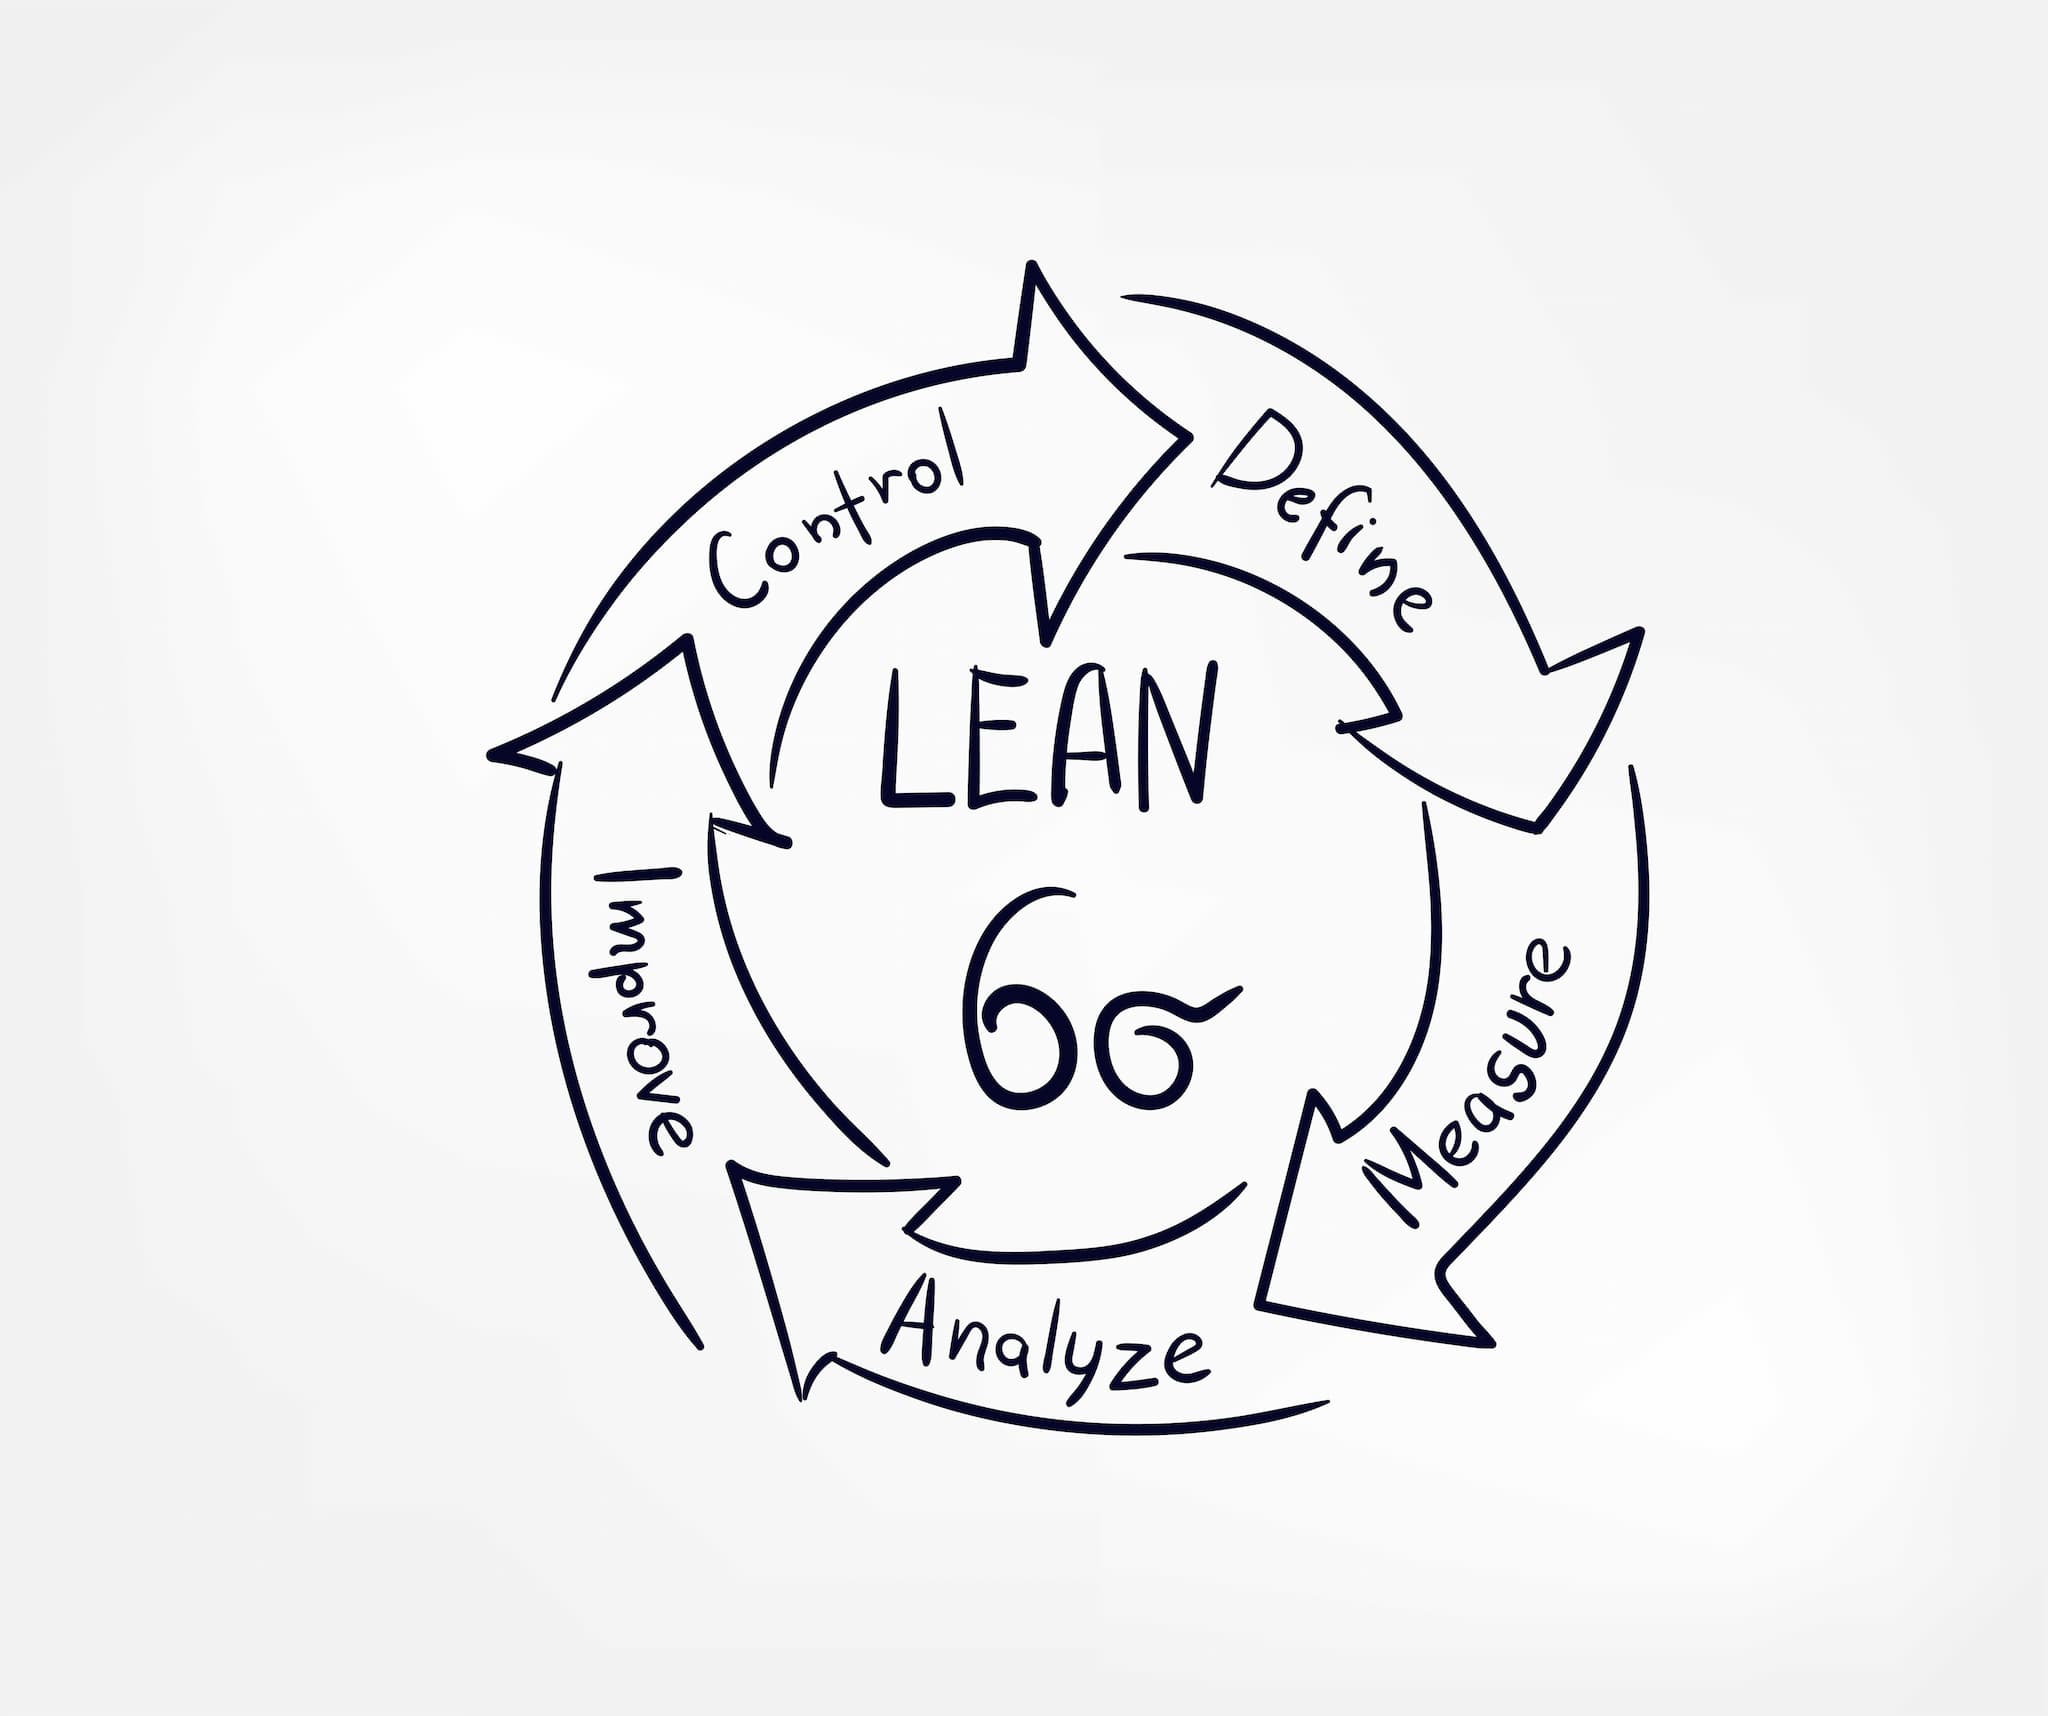 Lean Six Sigma cyclical DMAIC waste reduction diagram